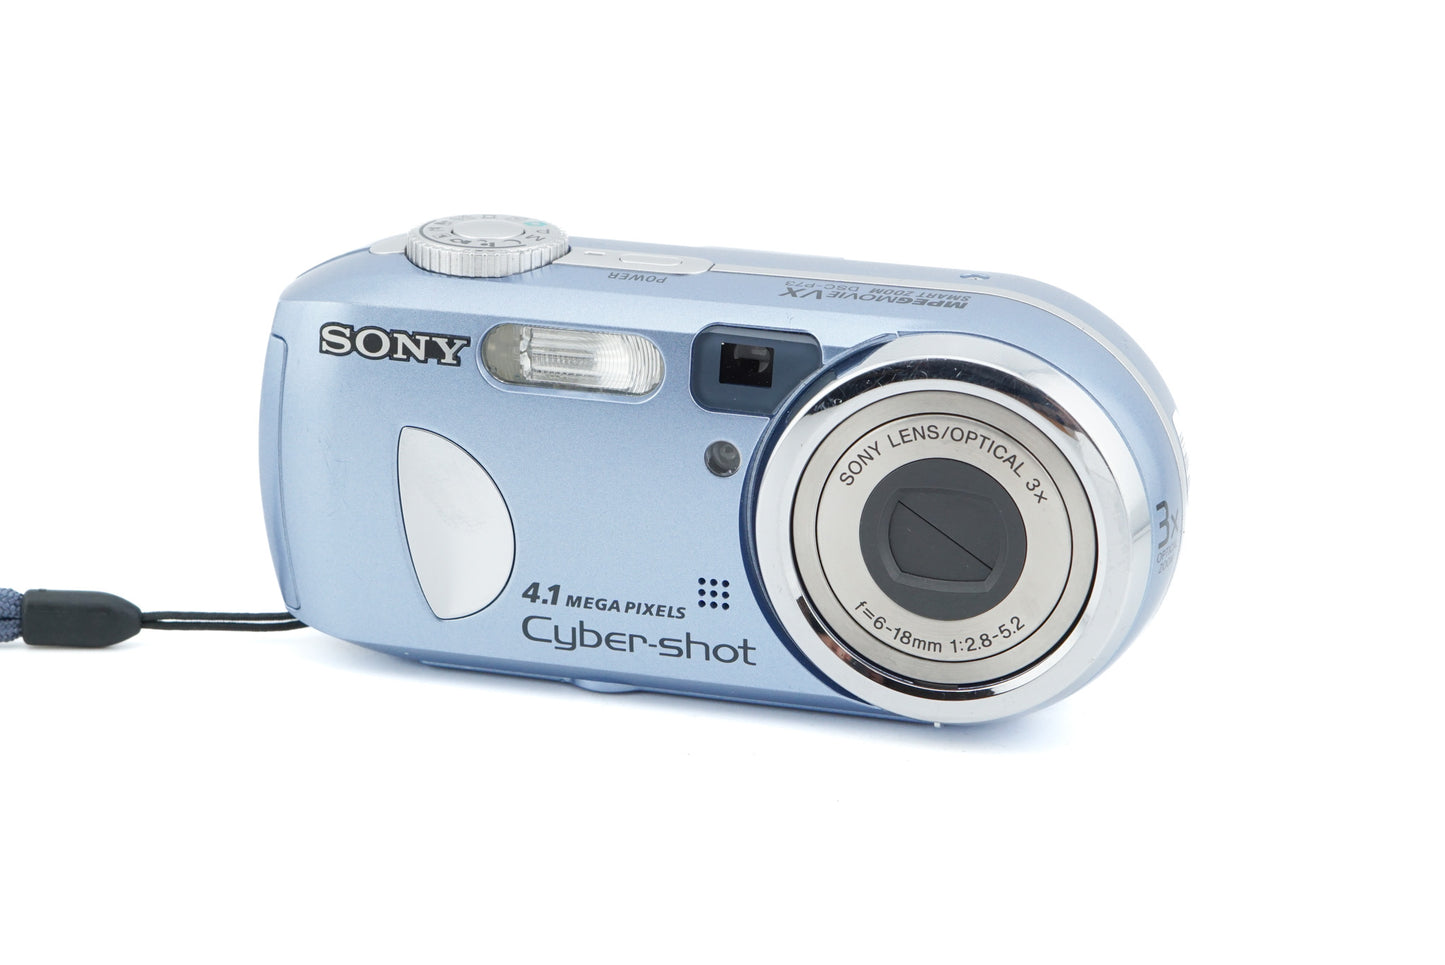 Sony Cyber-shot DSC-P73 - Camera